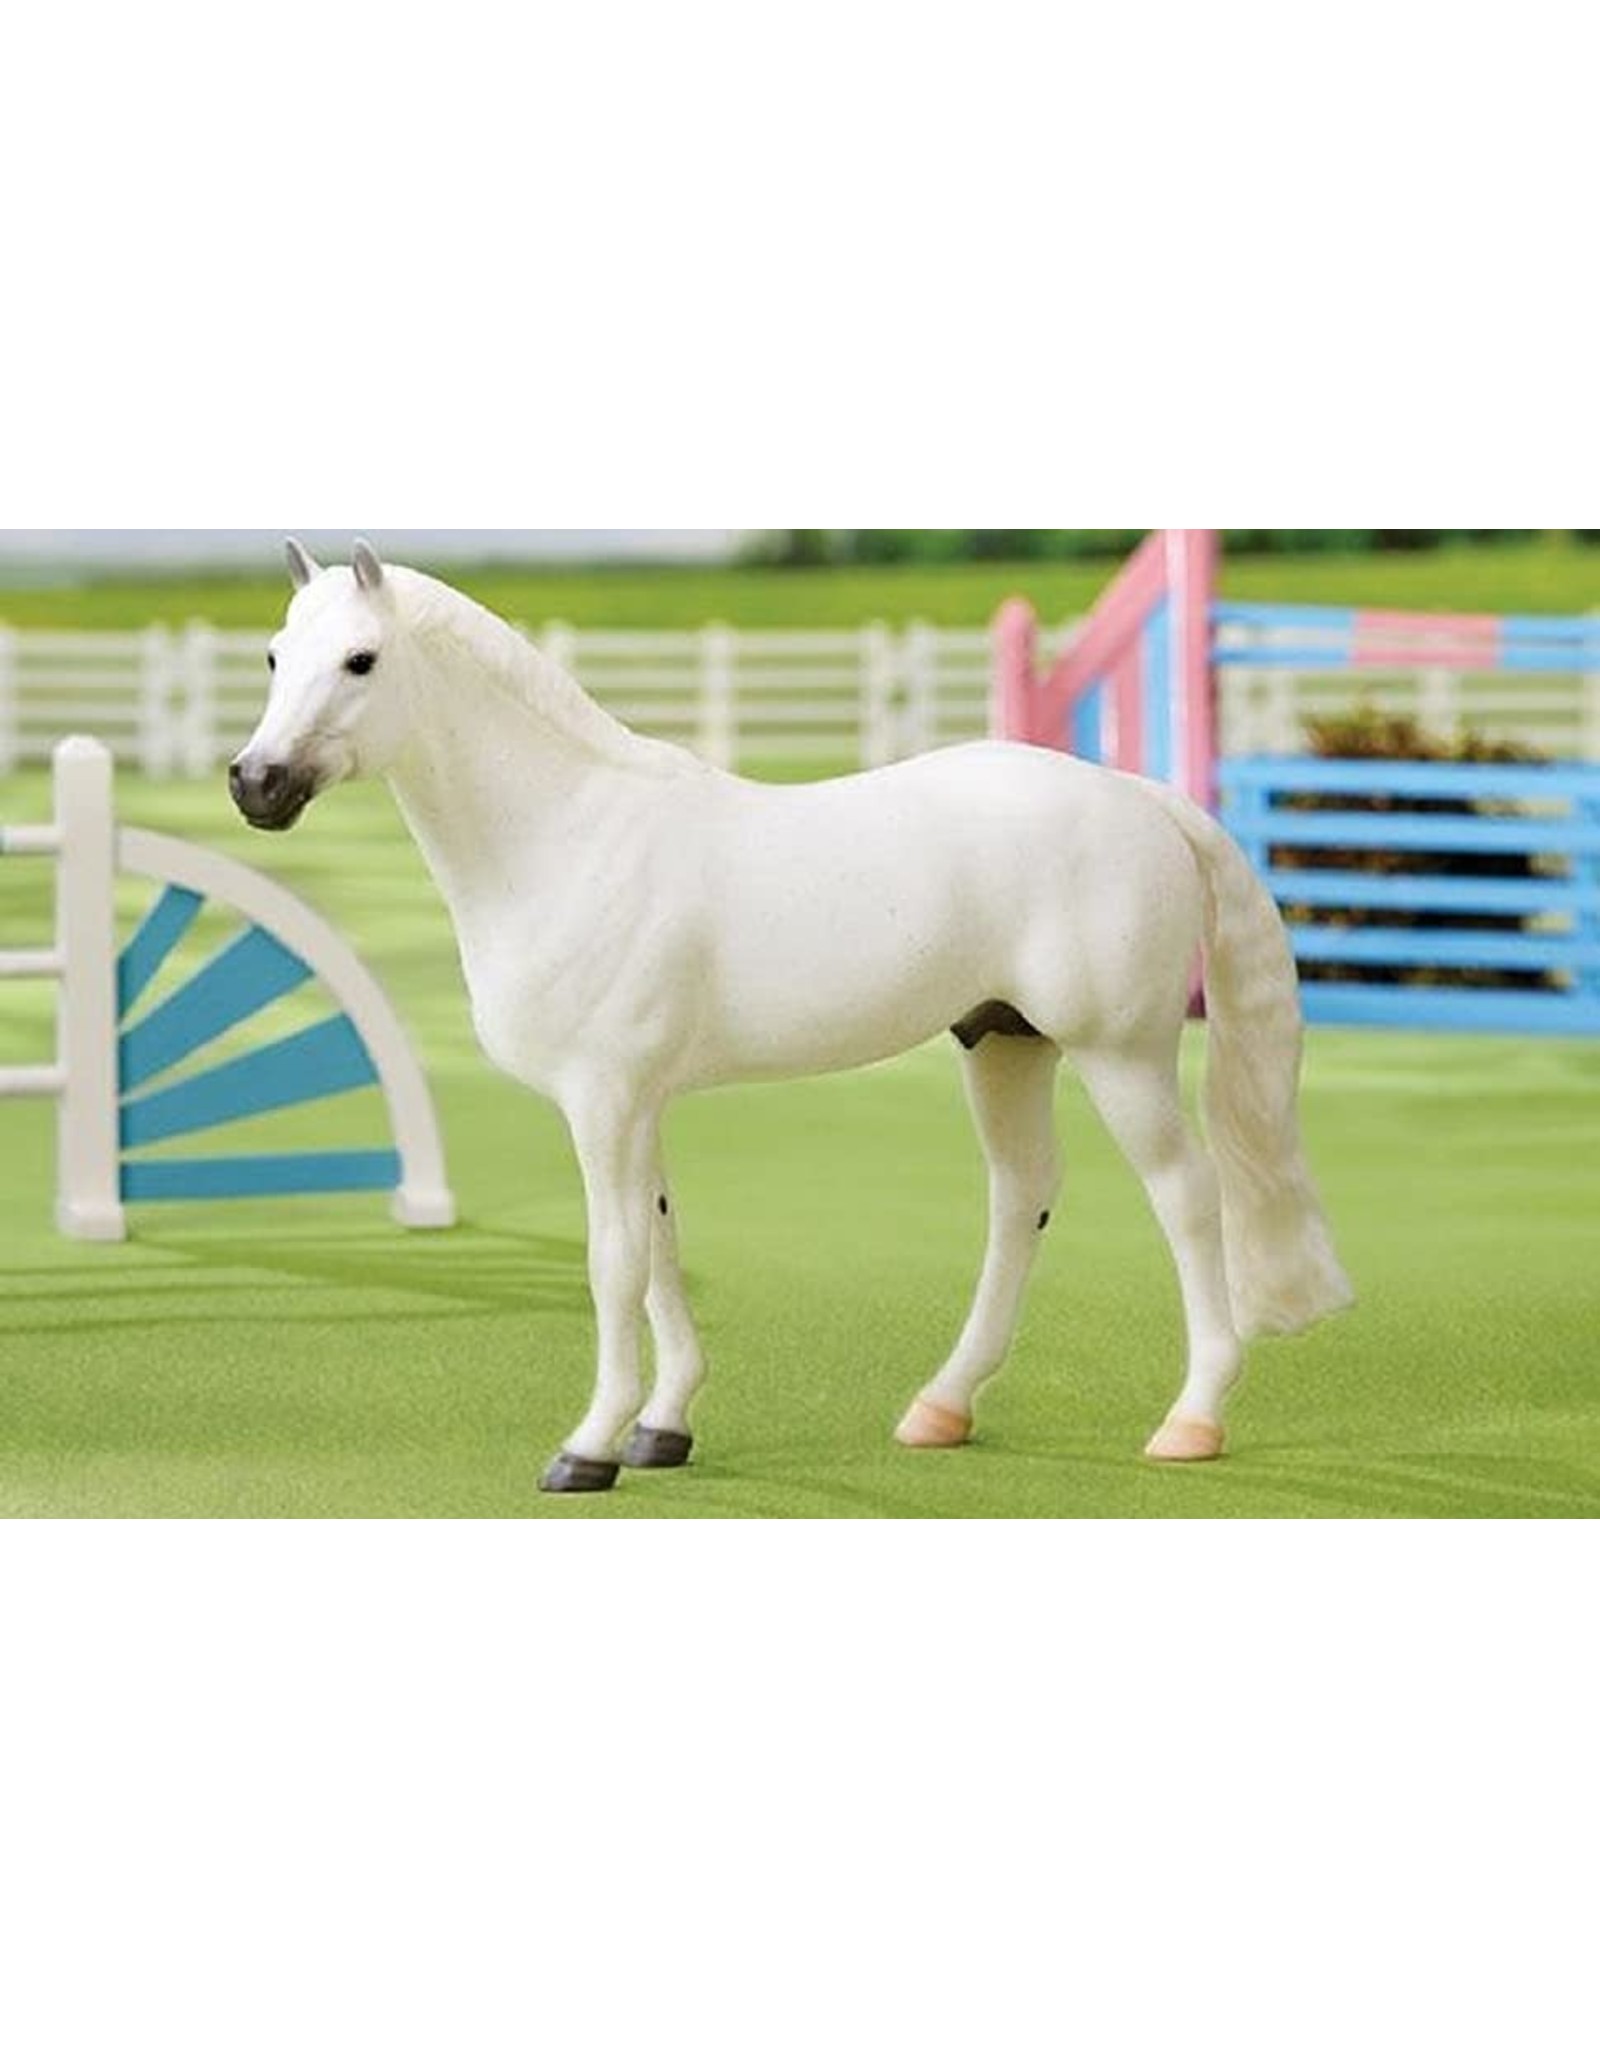 Breyer Snowman 1708 Model Horse